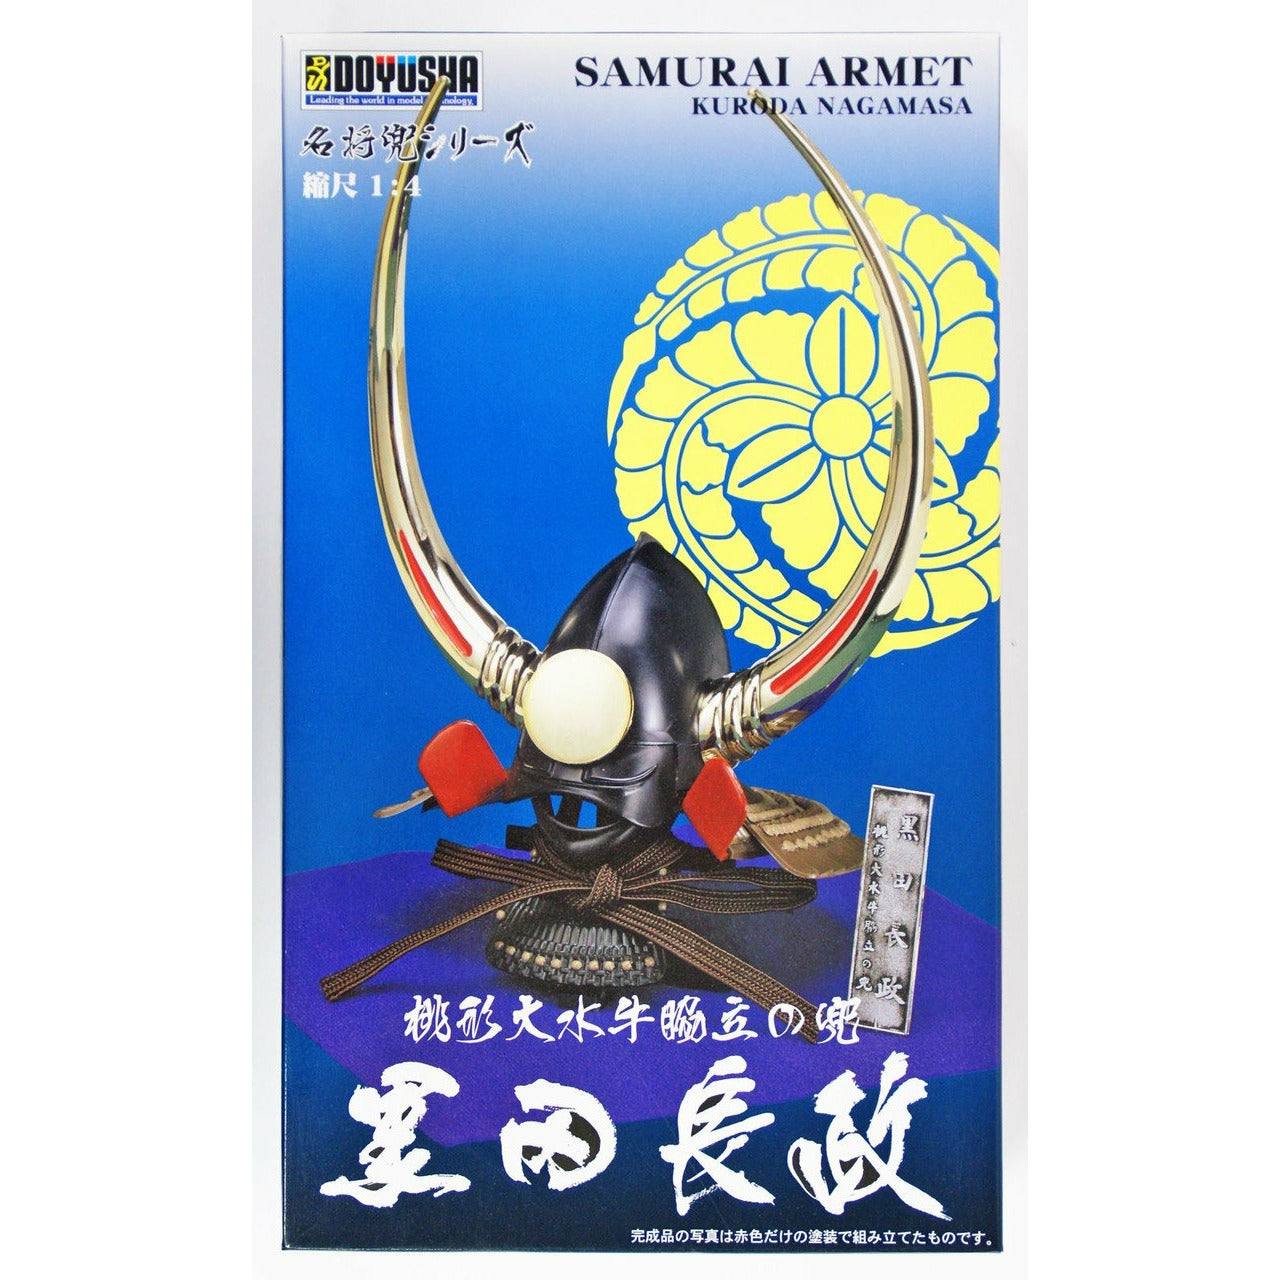 Samurai Armet "Nagamasa Kuroda" 1/4 by Doyusha